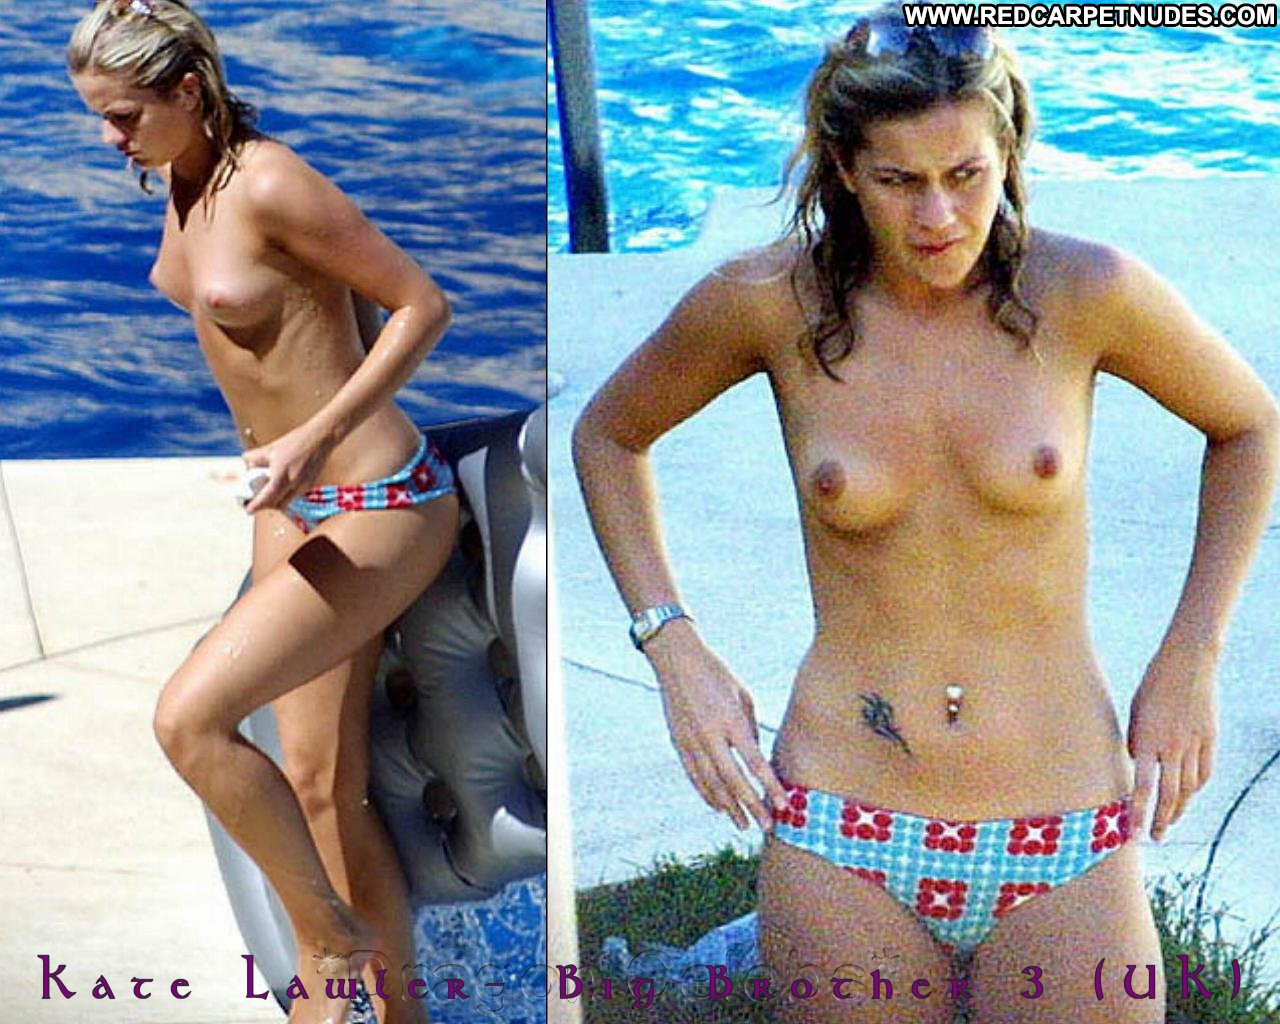 Celebrities Kate Lawler Sunning Topless.